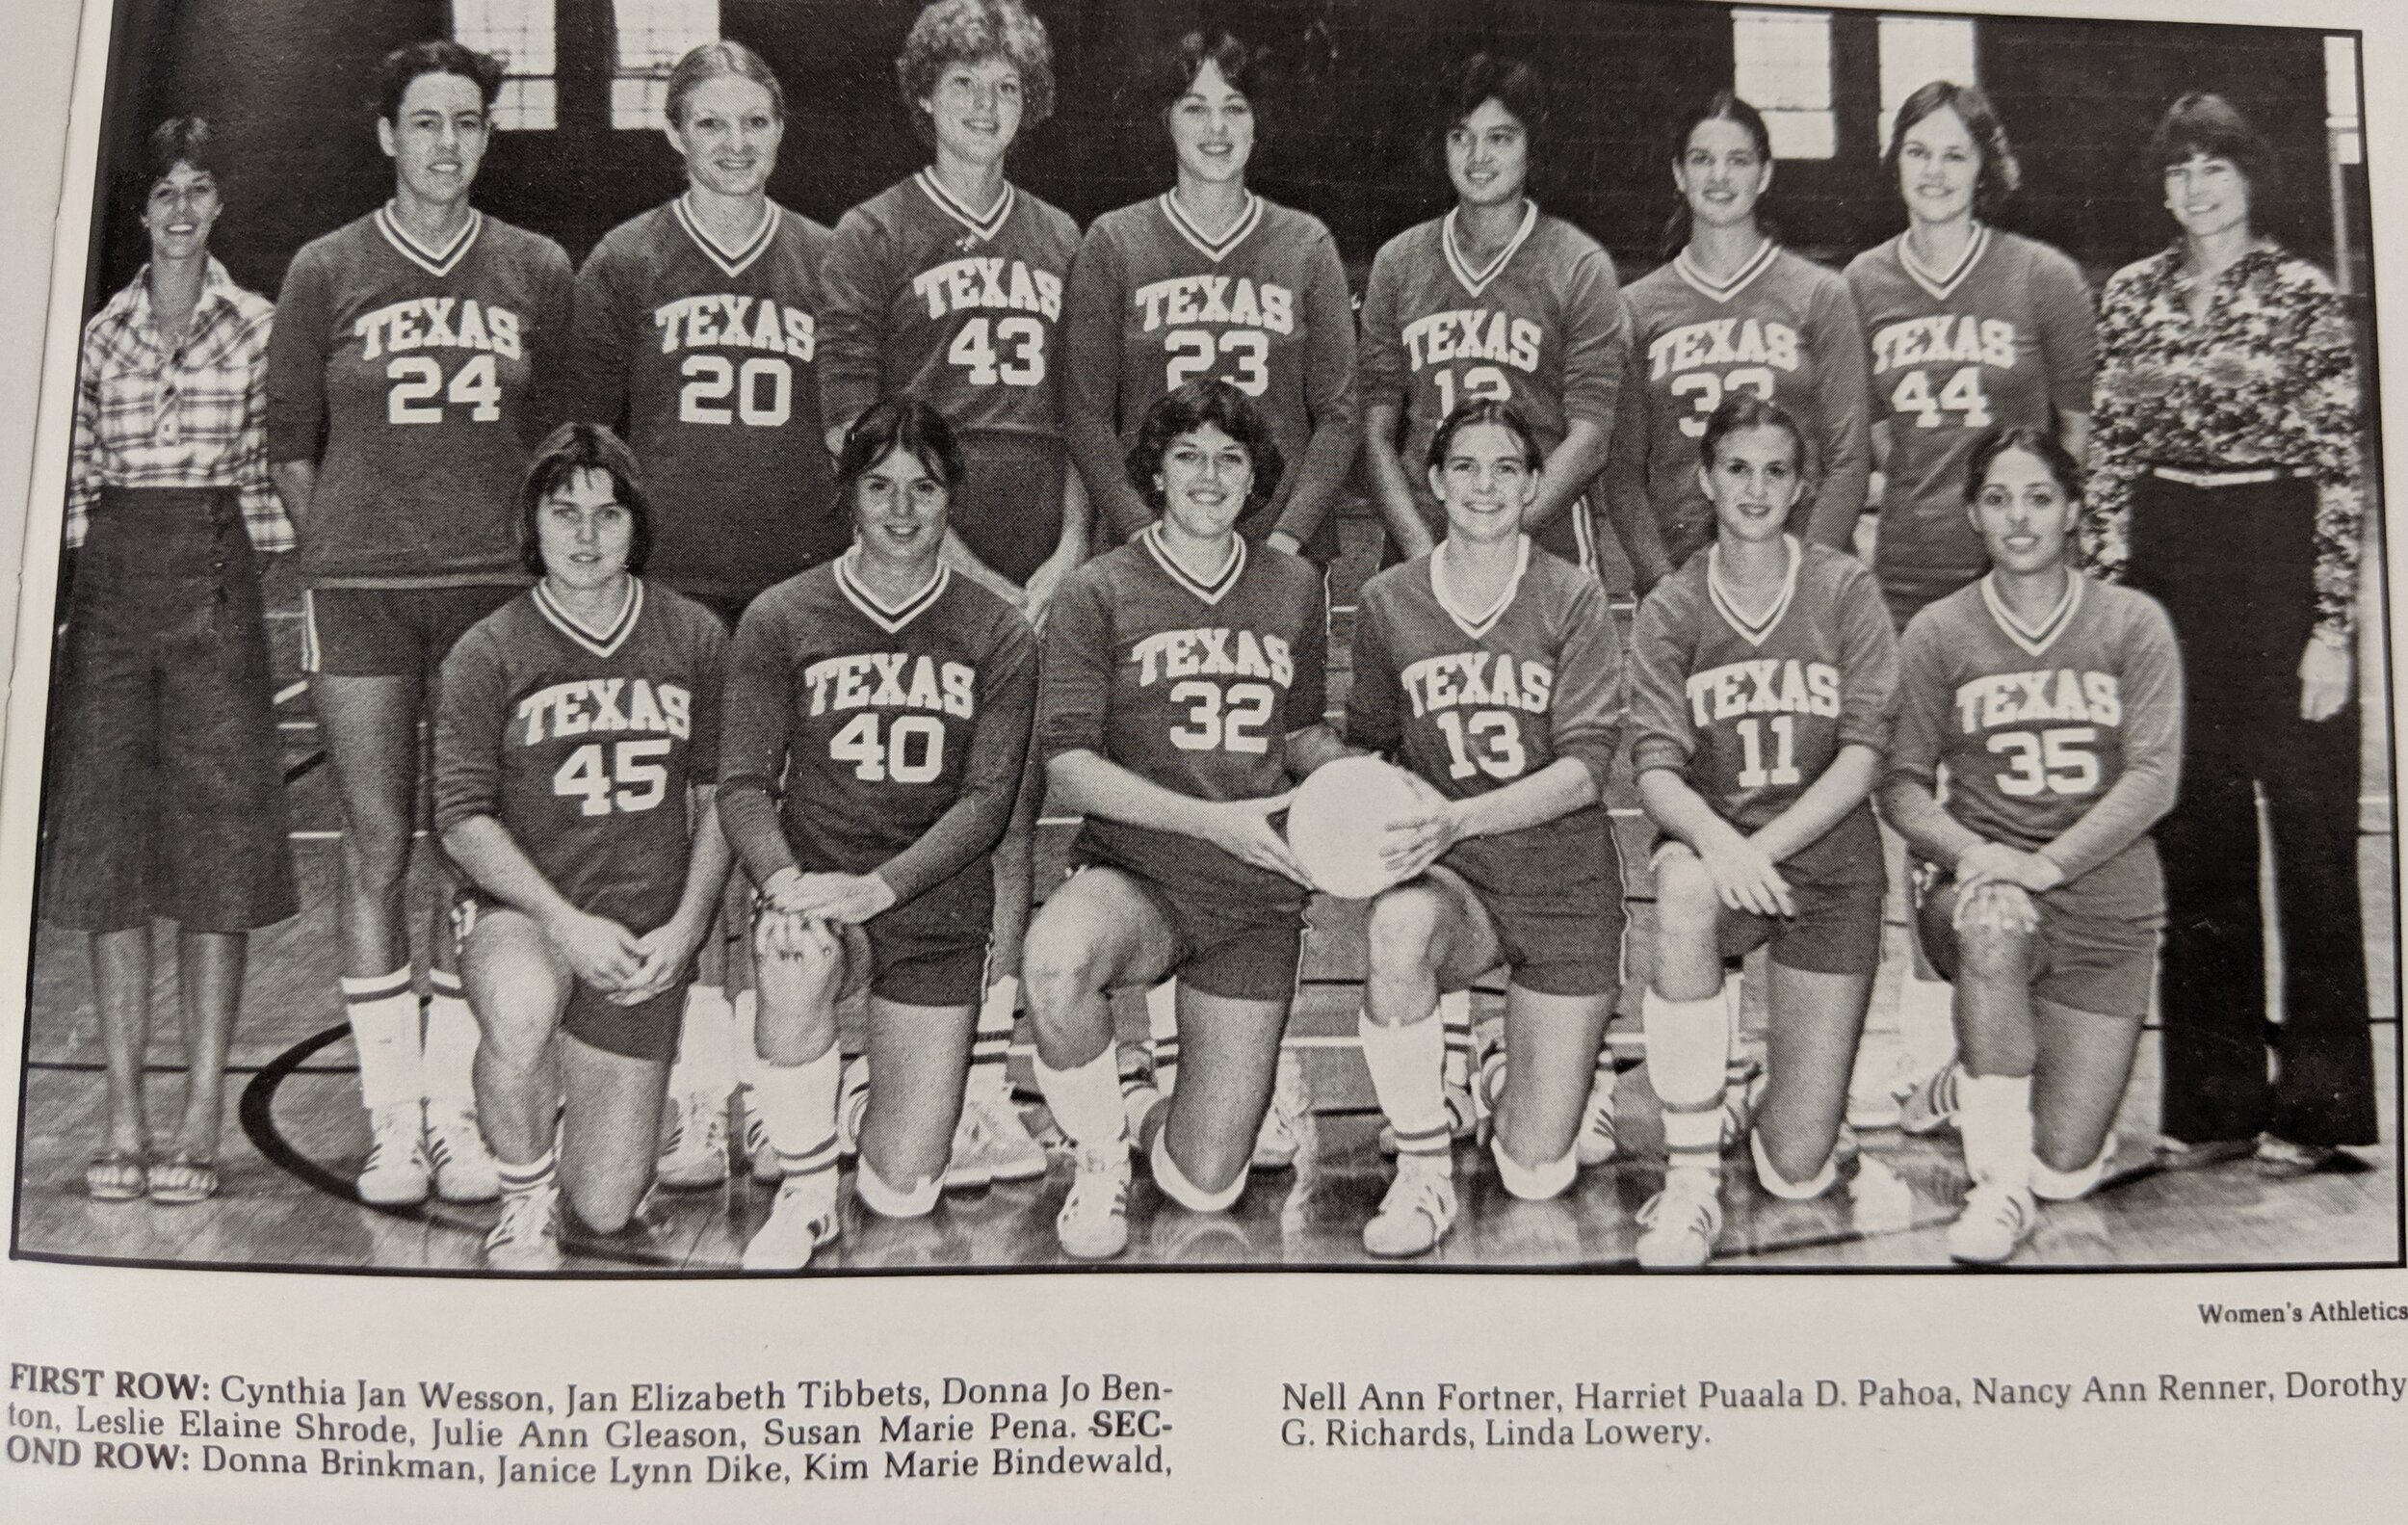  1979 volleyball front row - Wesson , Tibbets, Benton, Shrode, Gleason, Pena - back row- Brinkman, Dike, Bindwald, Fortner, Pahoa, Renner, Richards, Lowery 